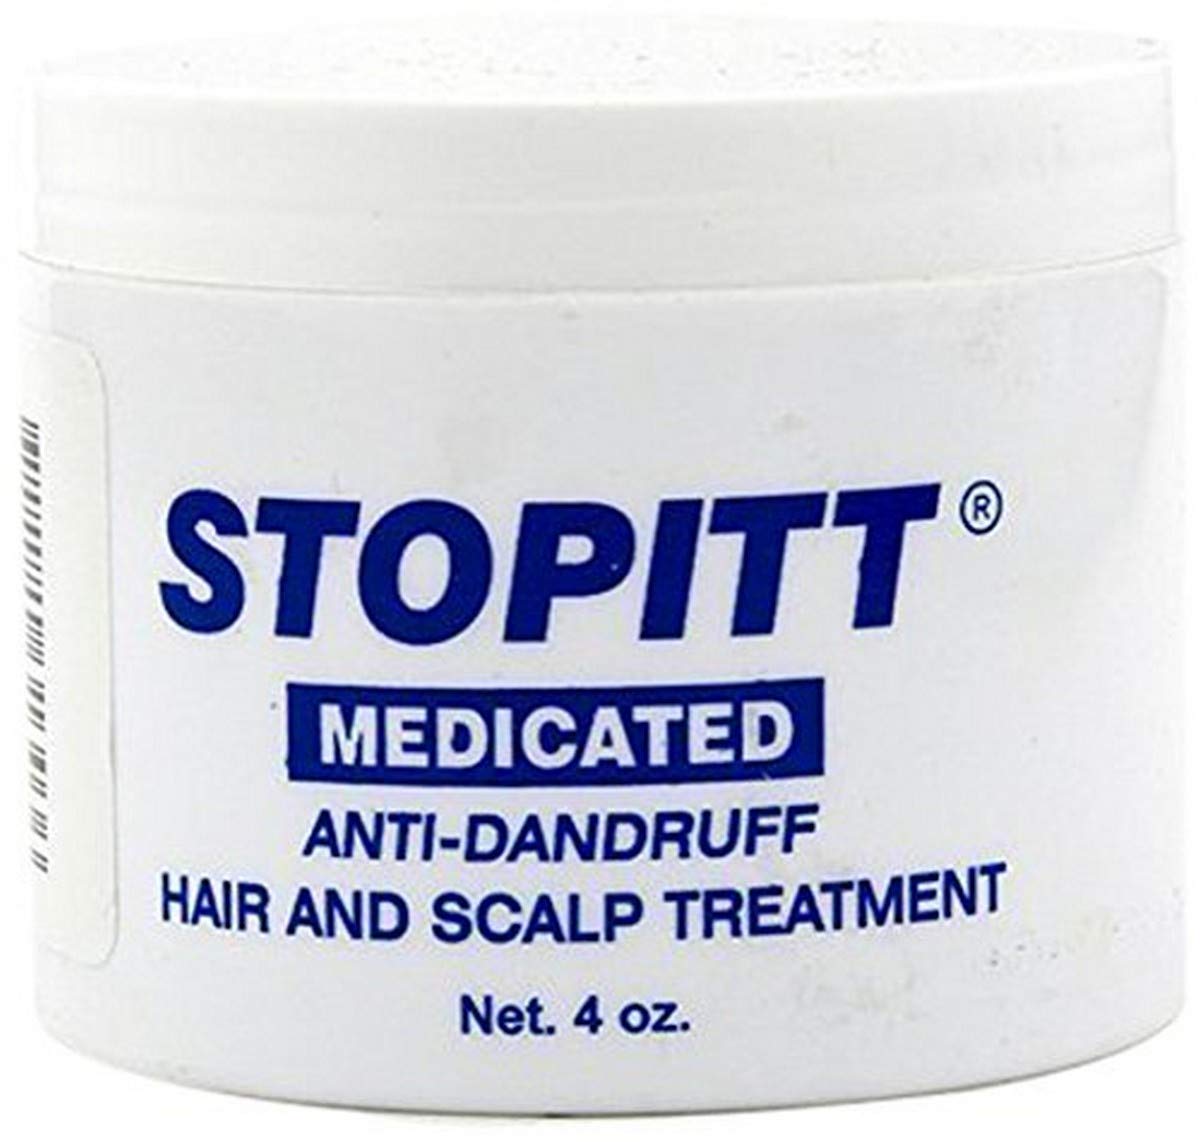 Stopitt Medicated Anti-Dandruff Hair & Scalp Treatment